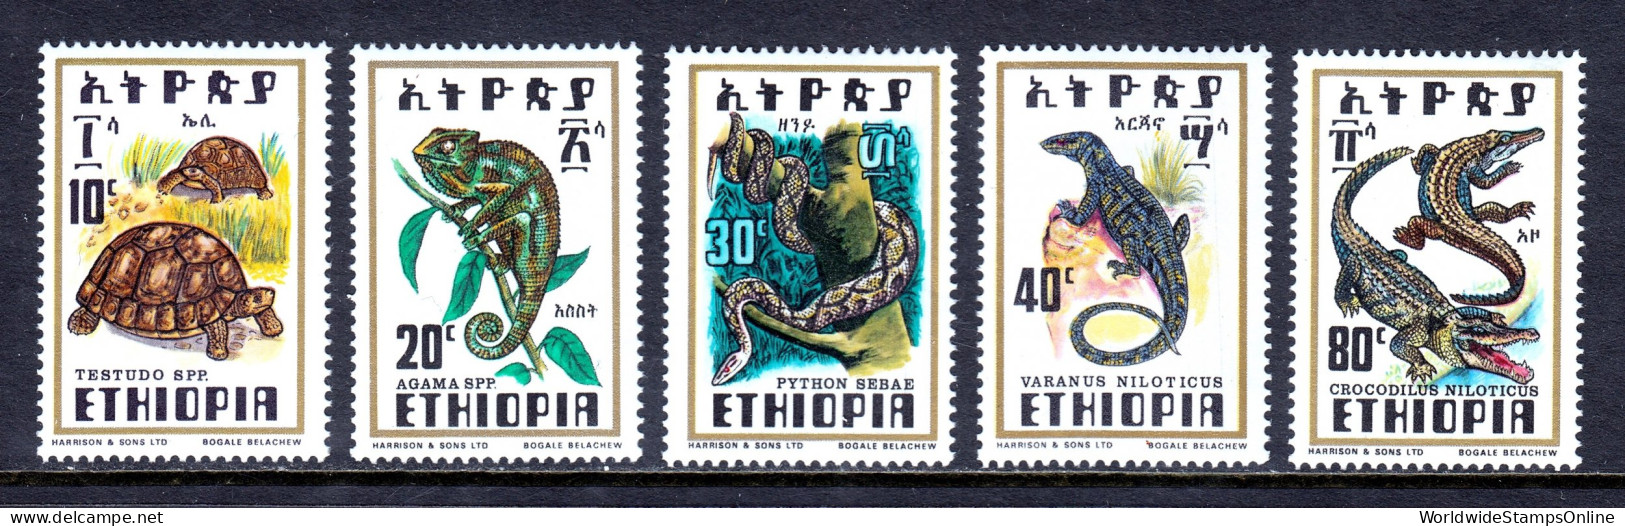 Ethiopia - Scott #812-816 - MNH - See Description - SCV $5.10 - Ethiopie